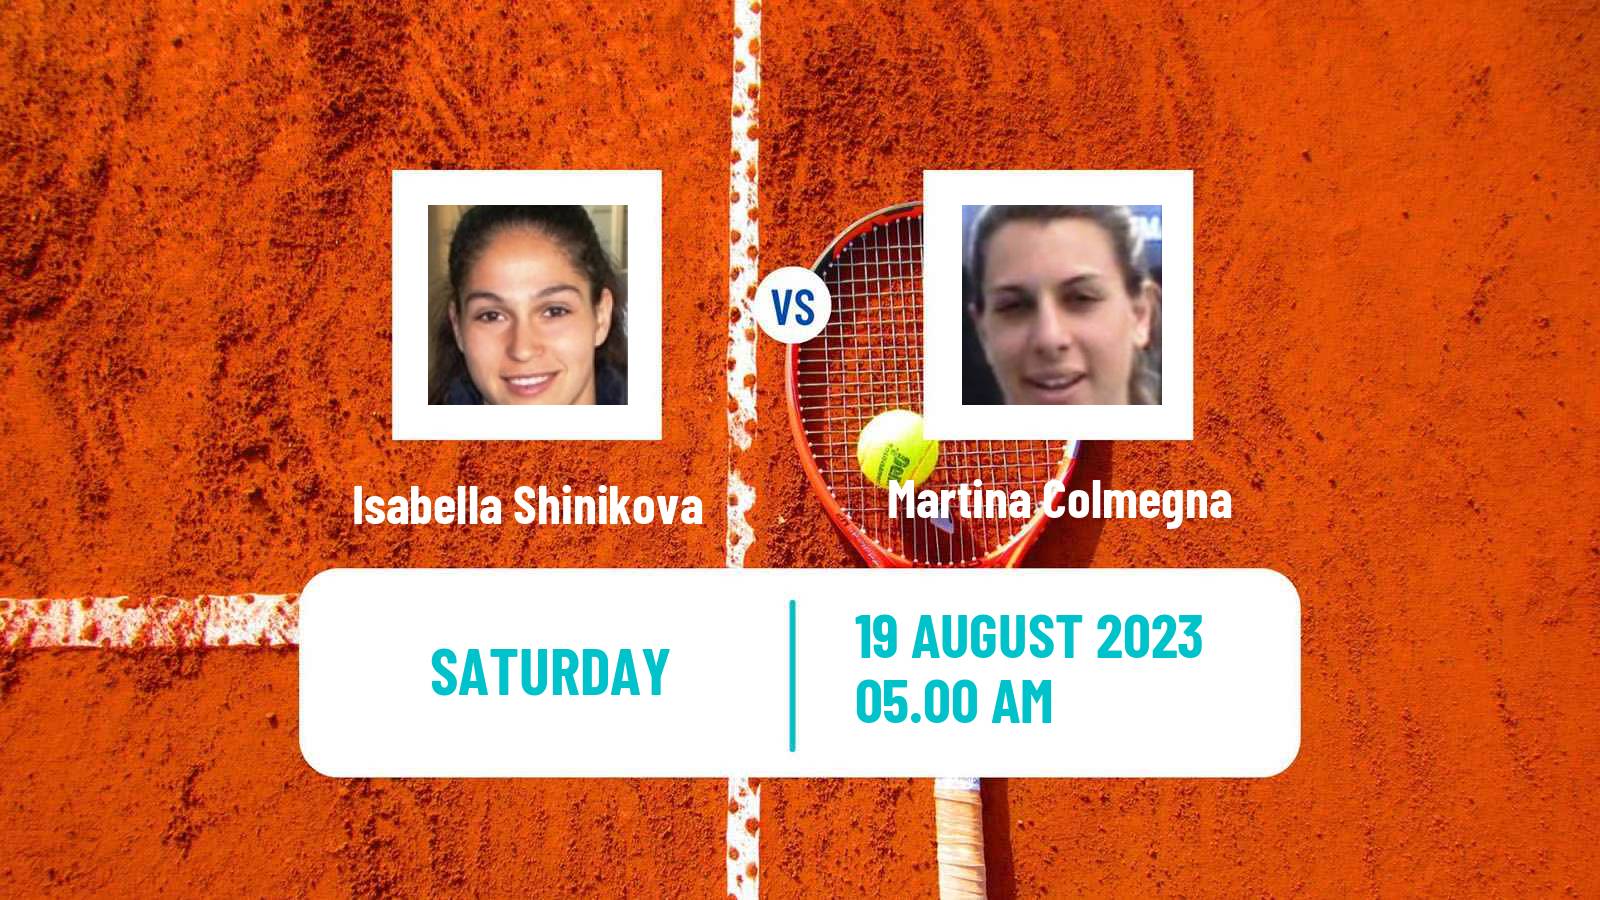 Tennis ITF W25 Vrnjacka Banja Women Isabella Shinikova - Martina Colmegna